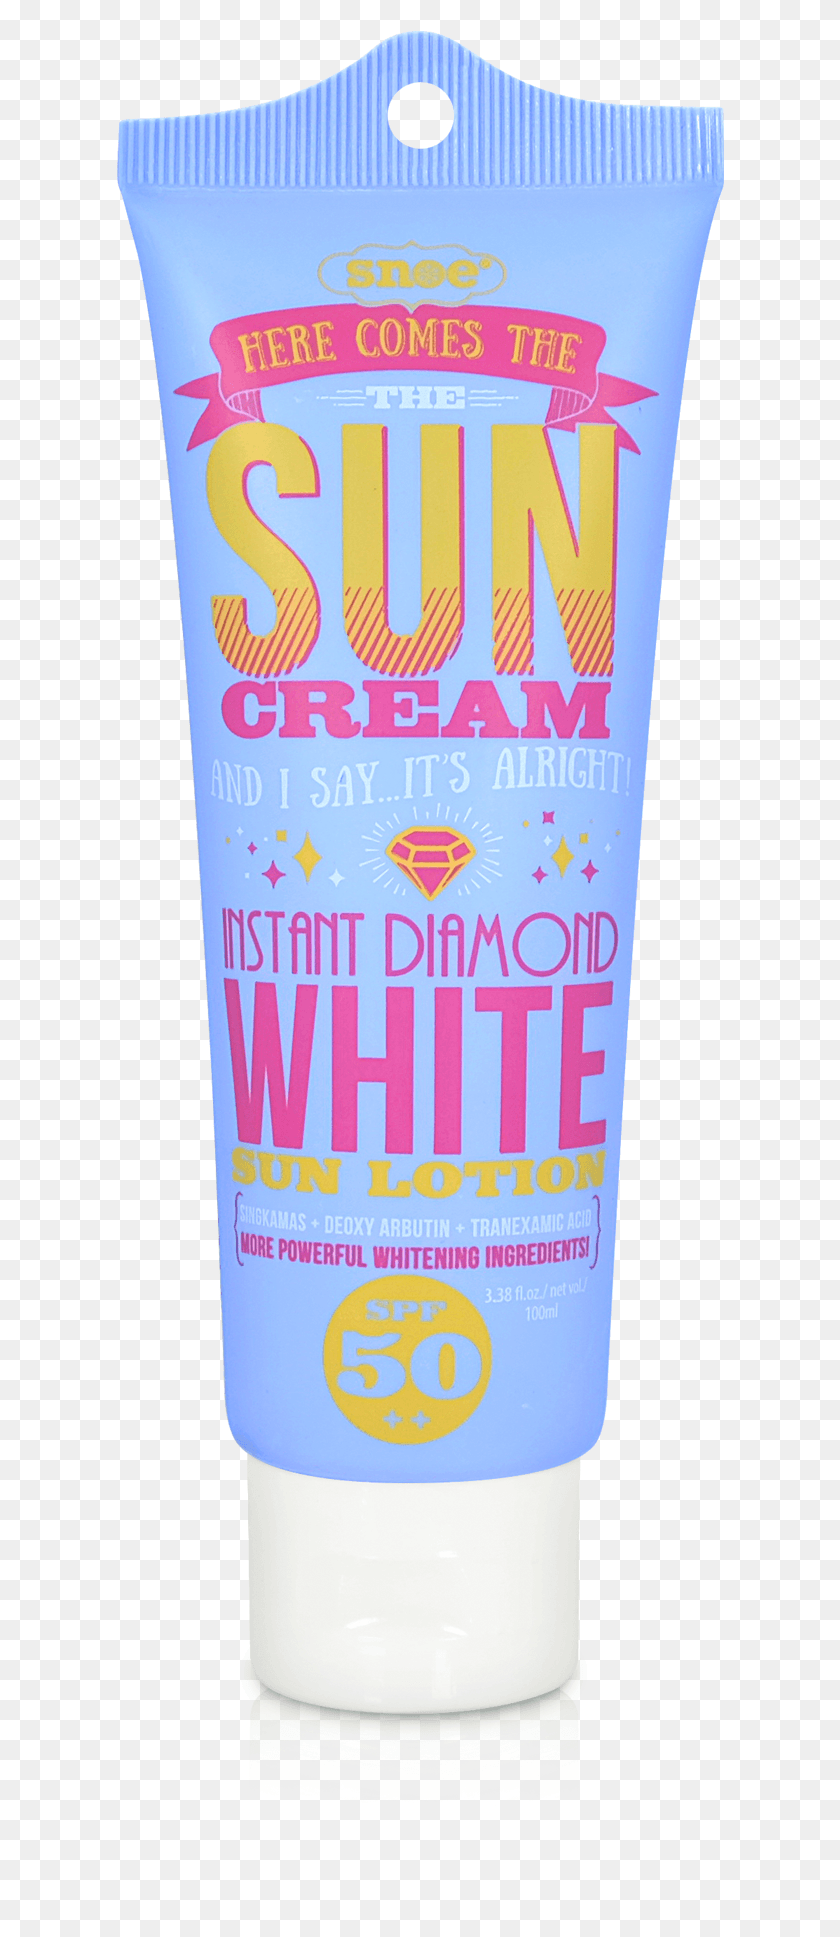 608x1877 Descargar Png Here Comes The Sun Cream Instant Diamond White Sun Poster, Botella, Protector Solar, Cosméticos Hd Png